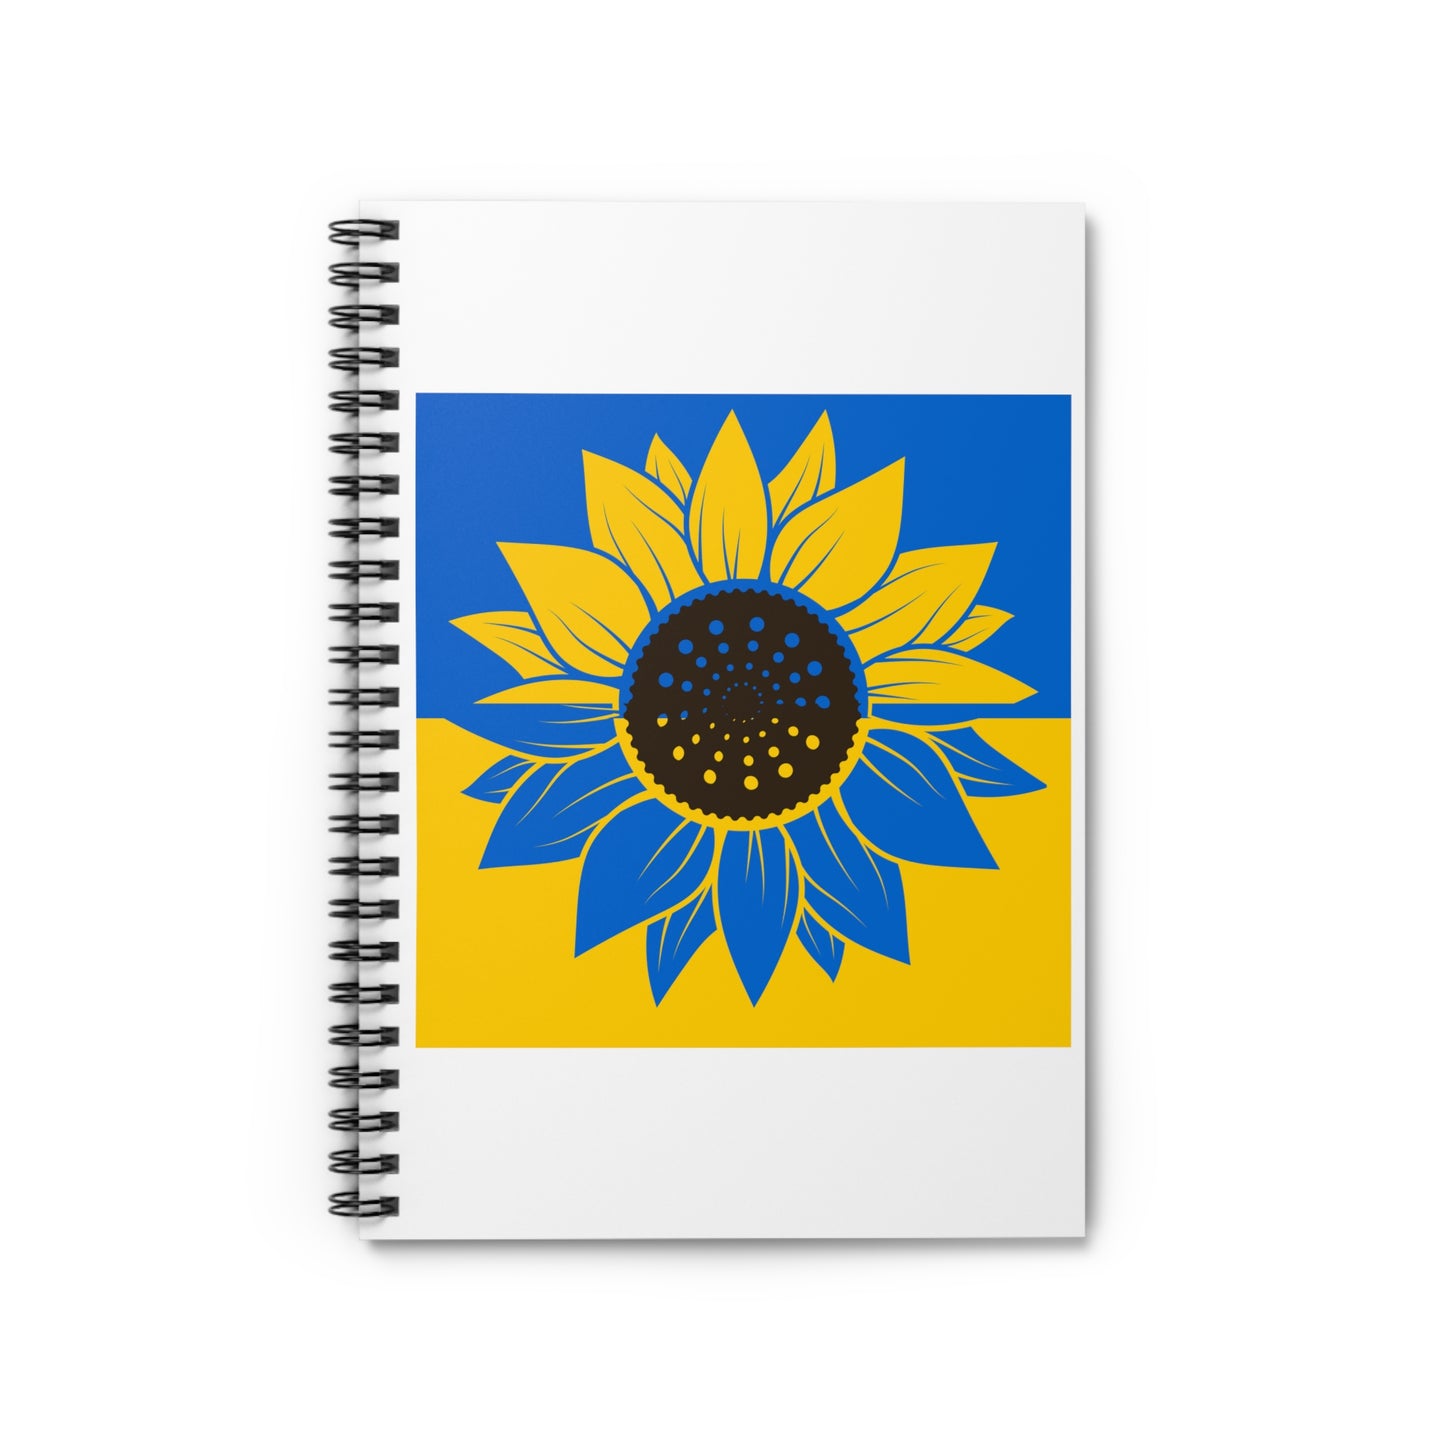 Ukrainian Flag Sunflower Spiral Notebook - Ruled Line